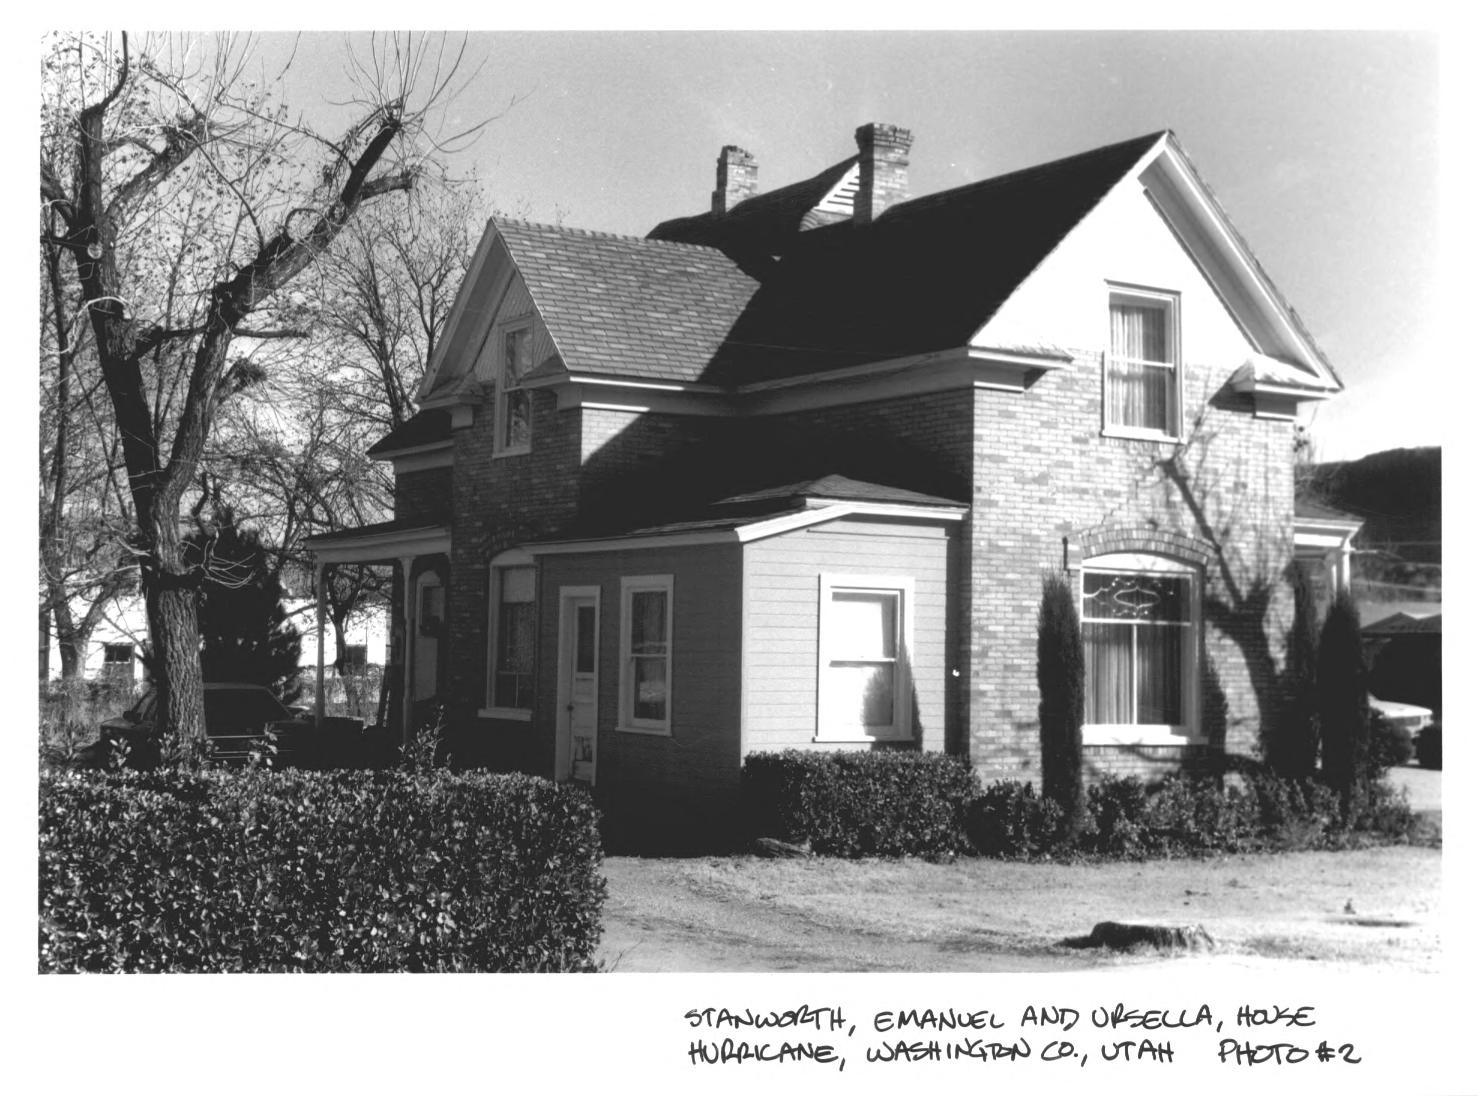 Emanuel & Ursella Stanworth home